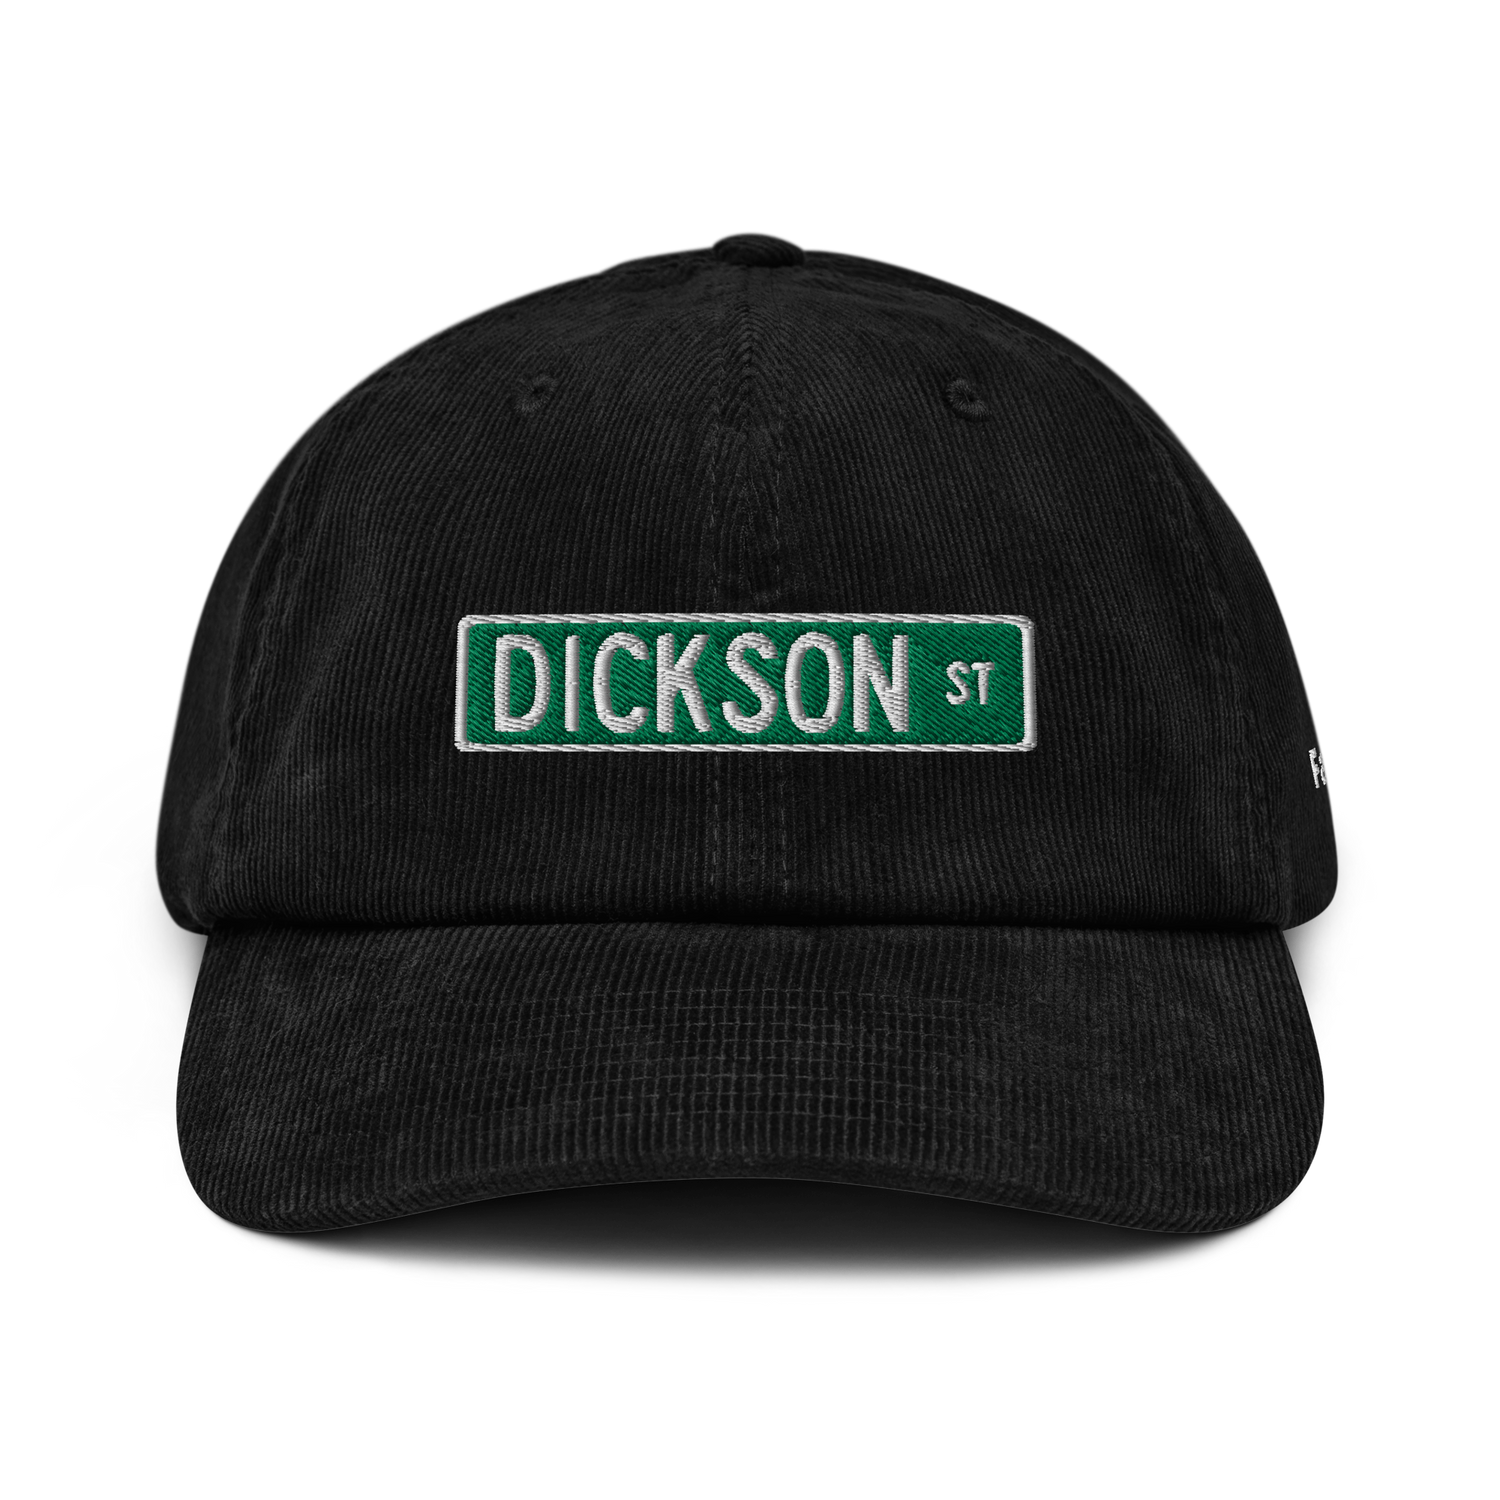 Dickson Street Sign Corduroy Hat